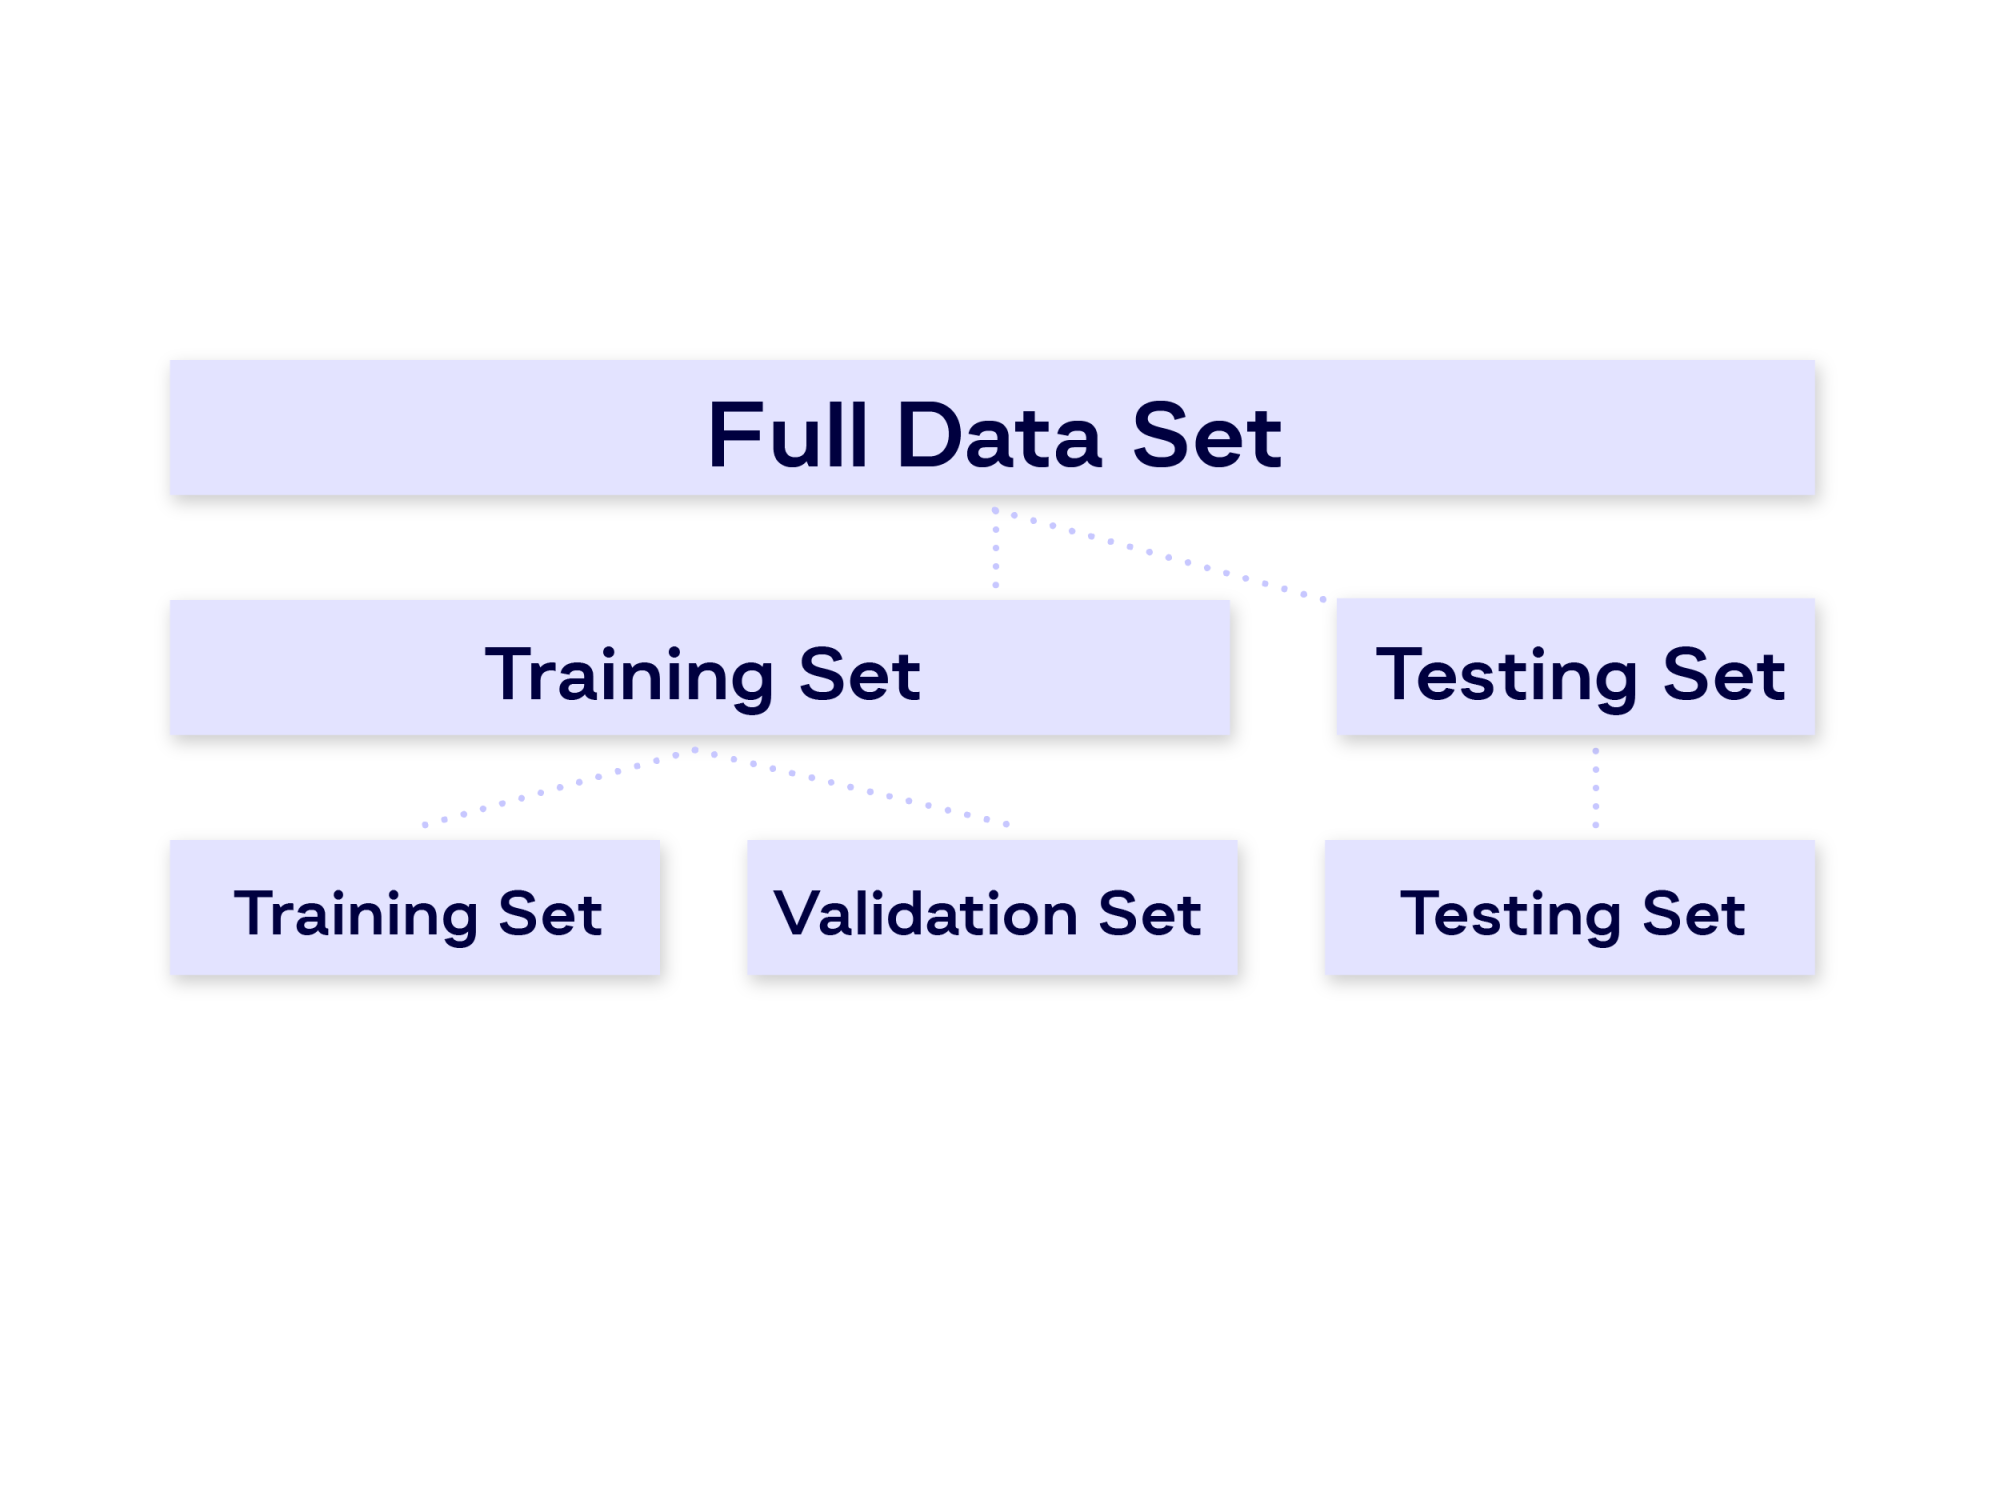 Screenshot of "Data Set" information